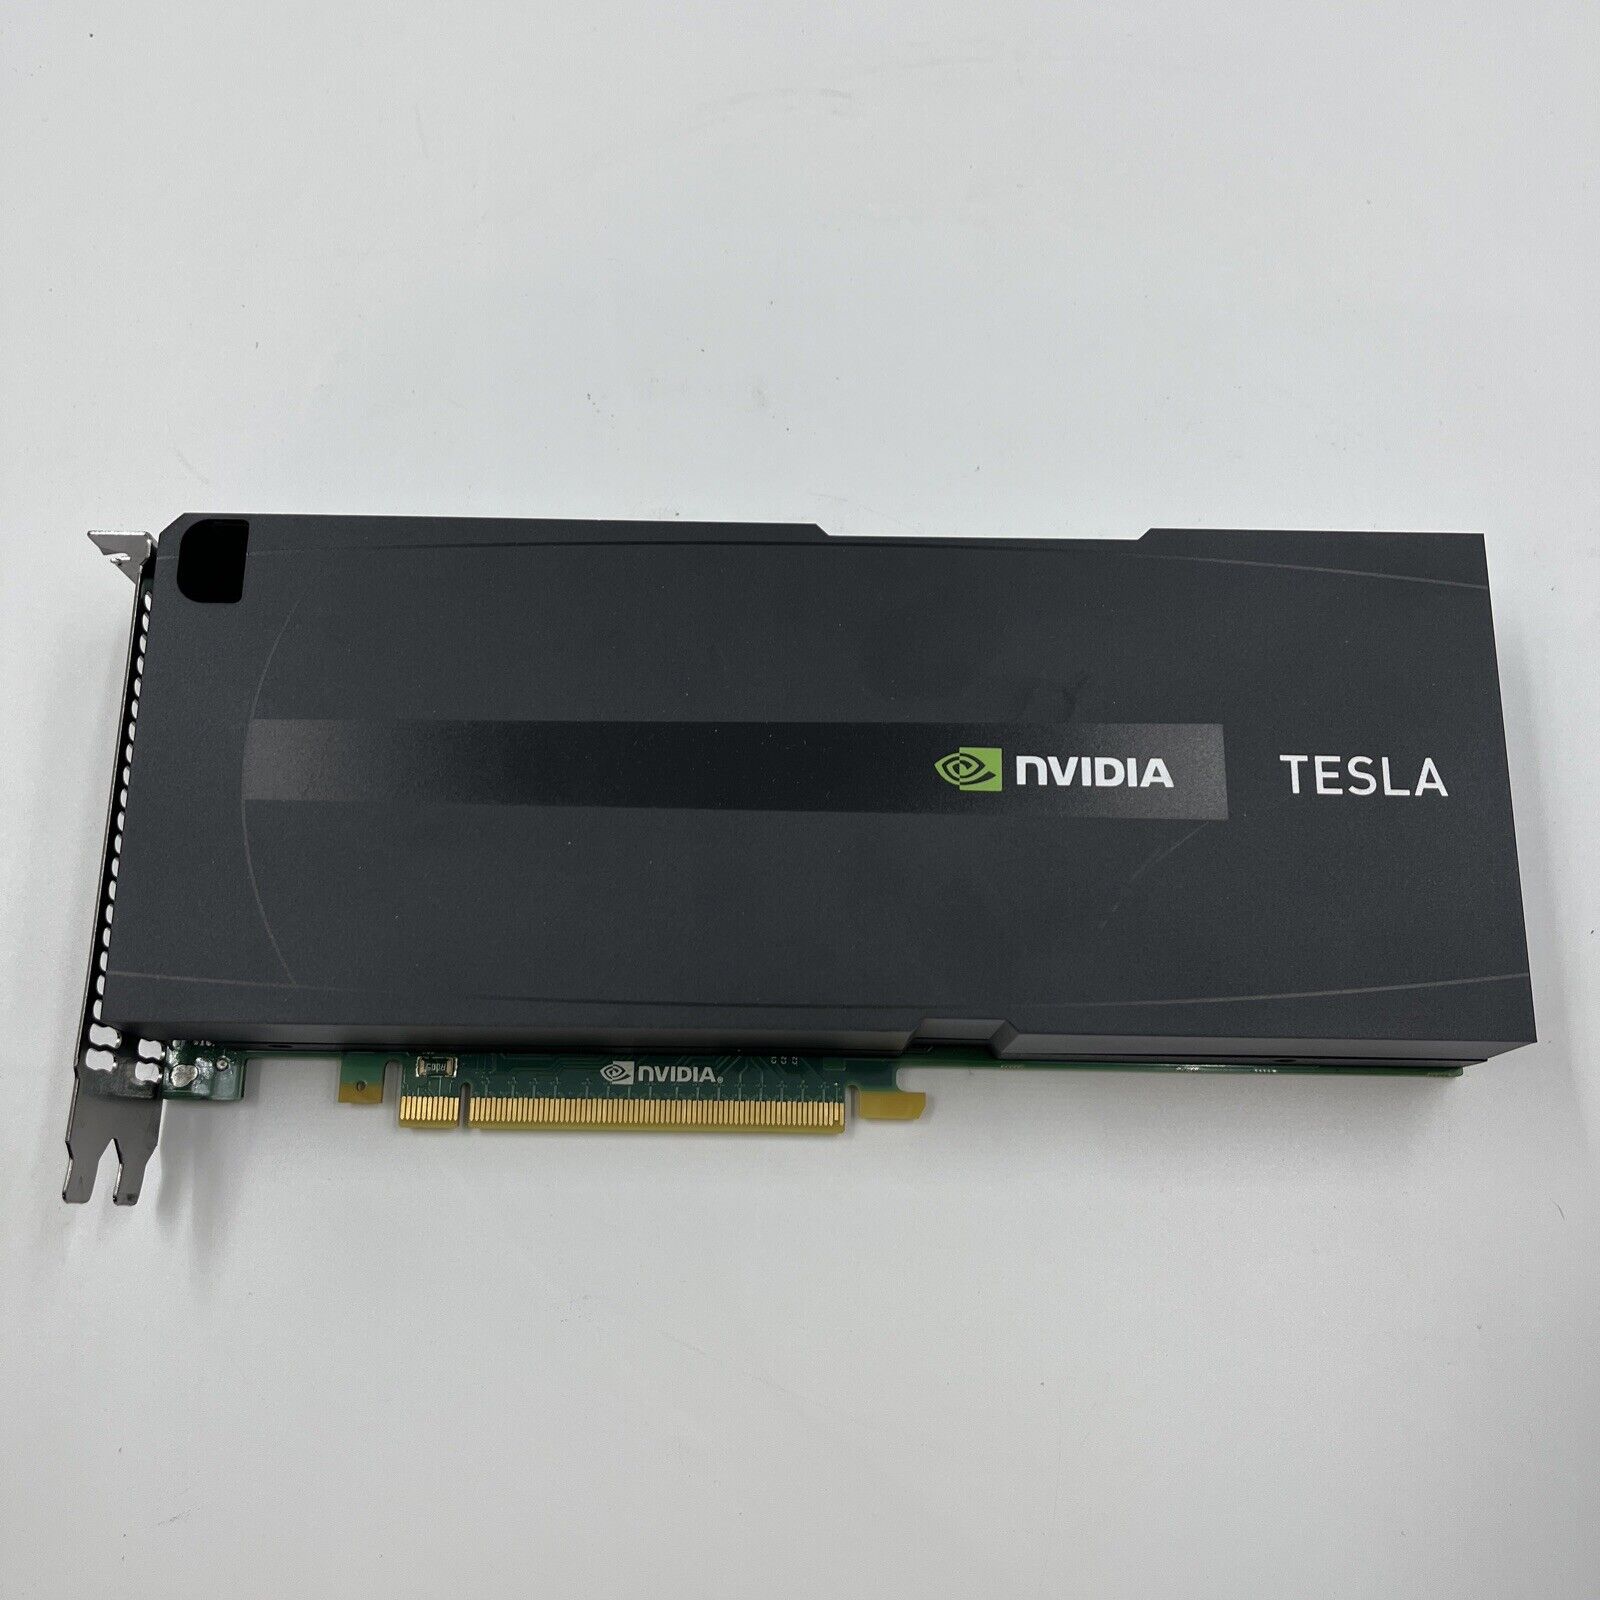 Dell-Nvidia Tesla M2090 6GB GDDR5